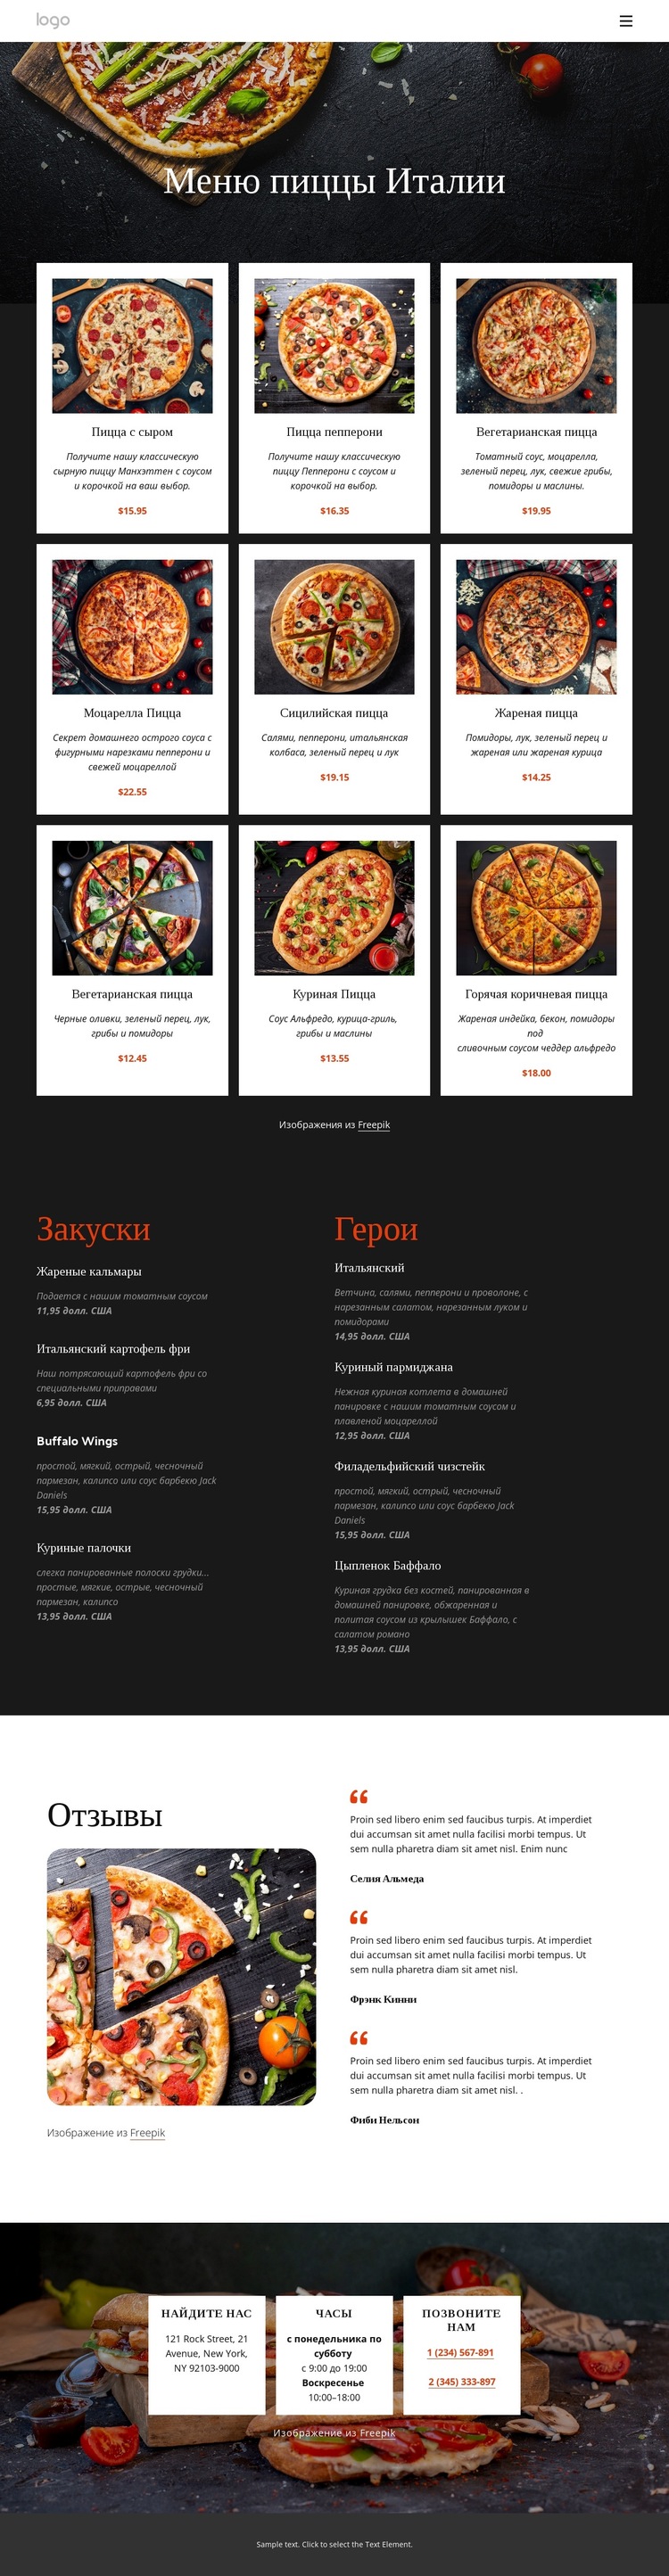 Наше меню пиццы Шаблон веб-сайта